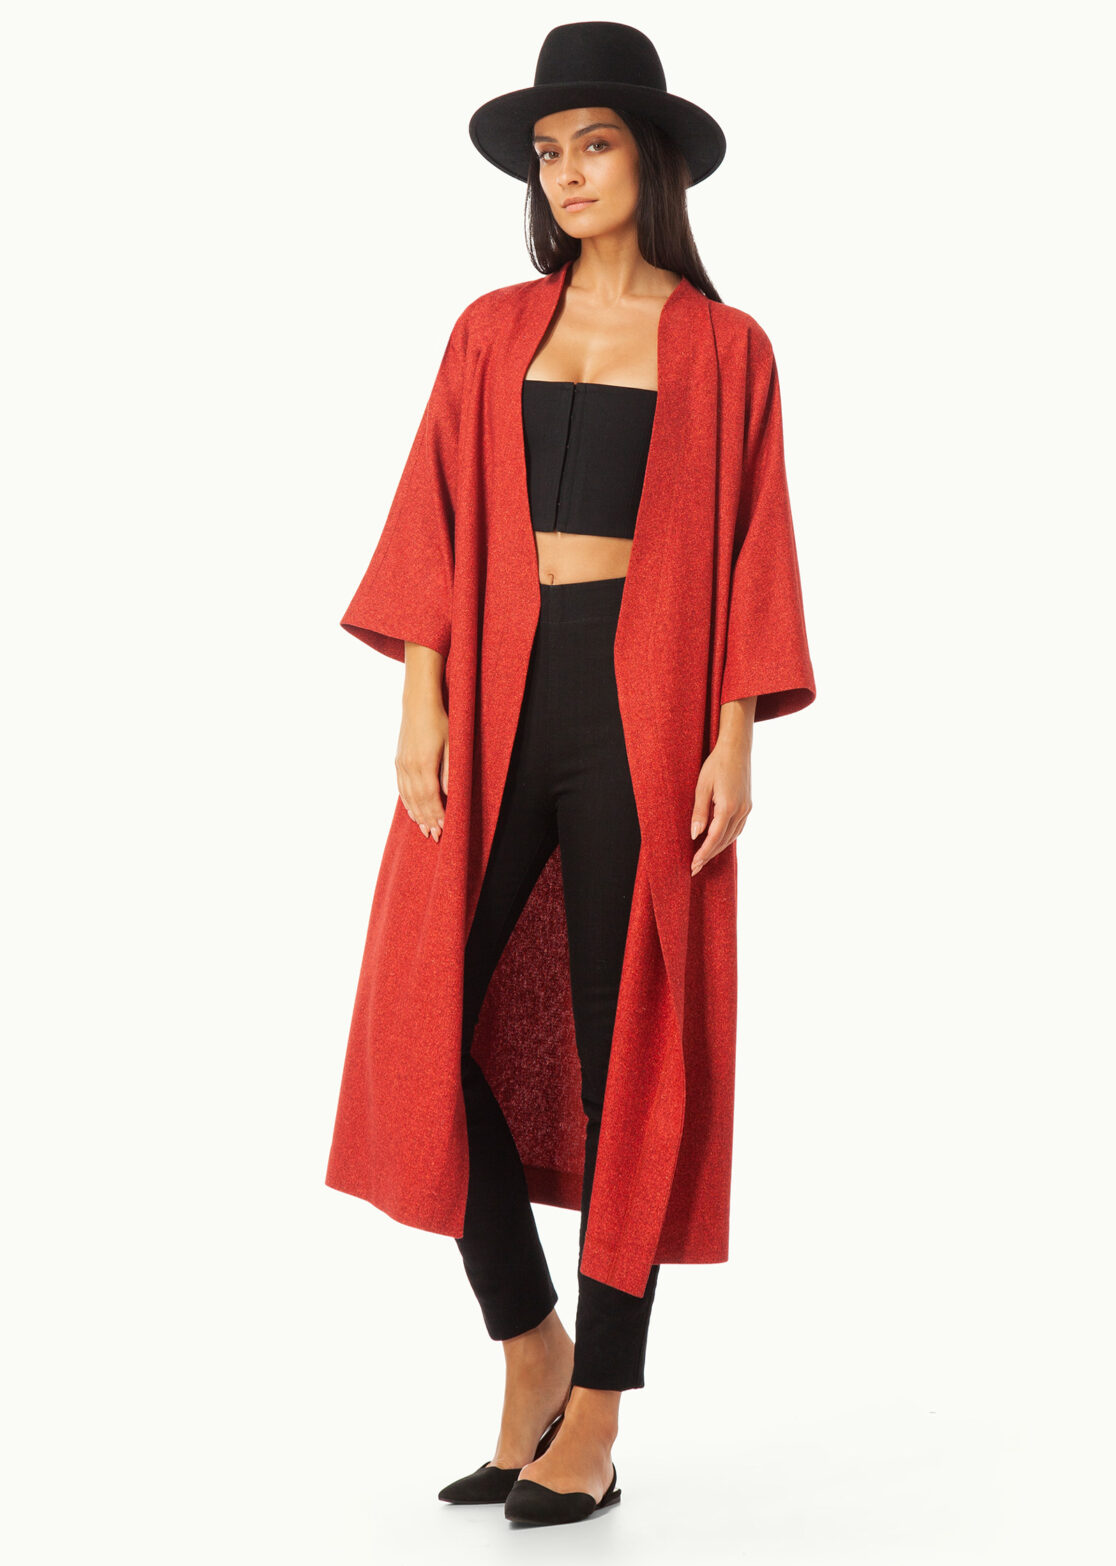 SALE - Women - Robes - Acadia Carmine Image Secondary